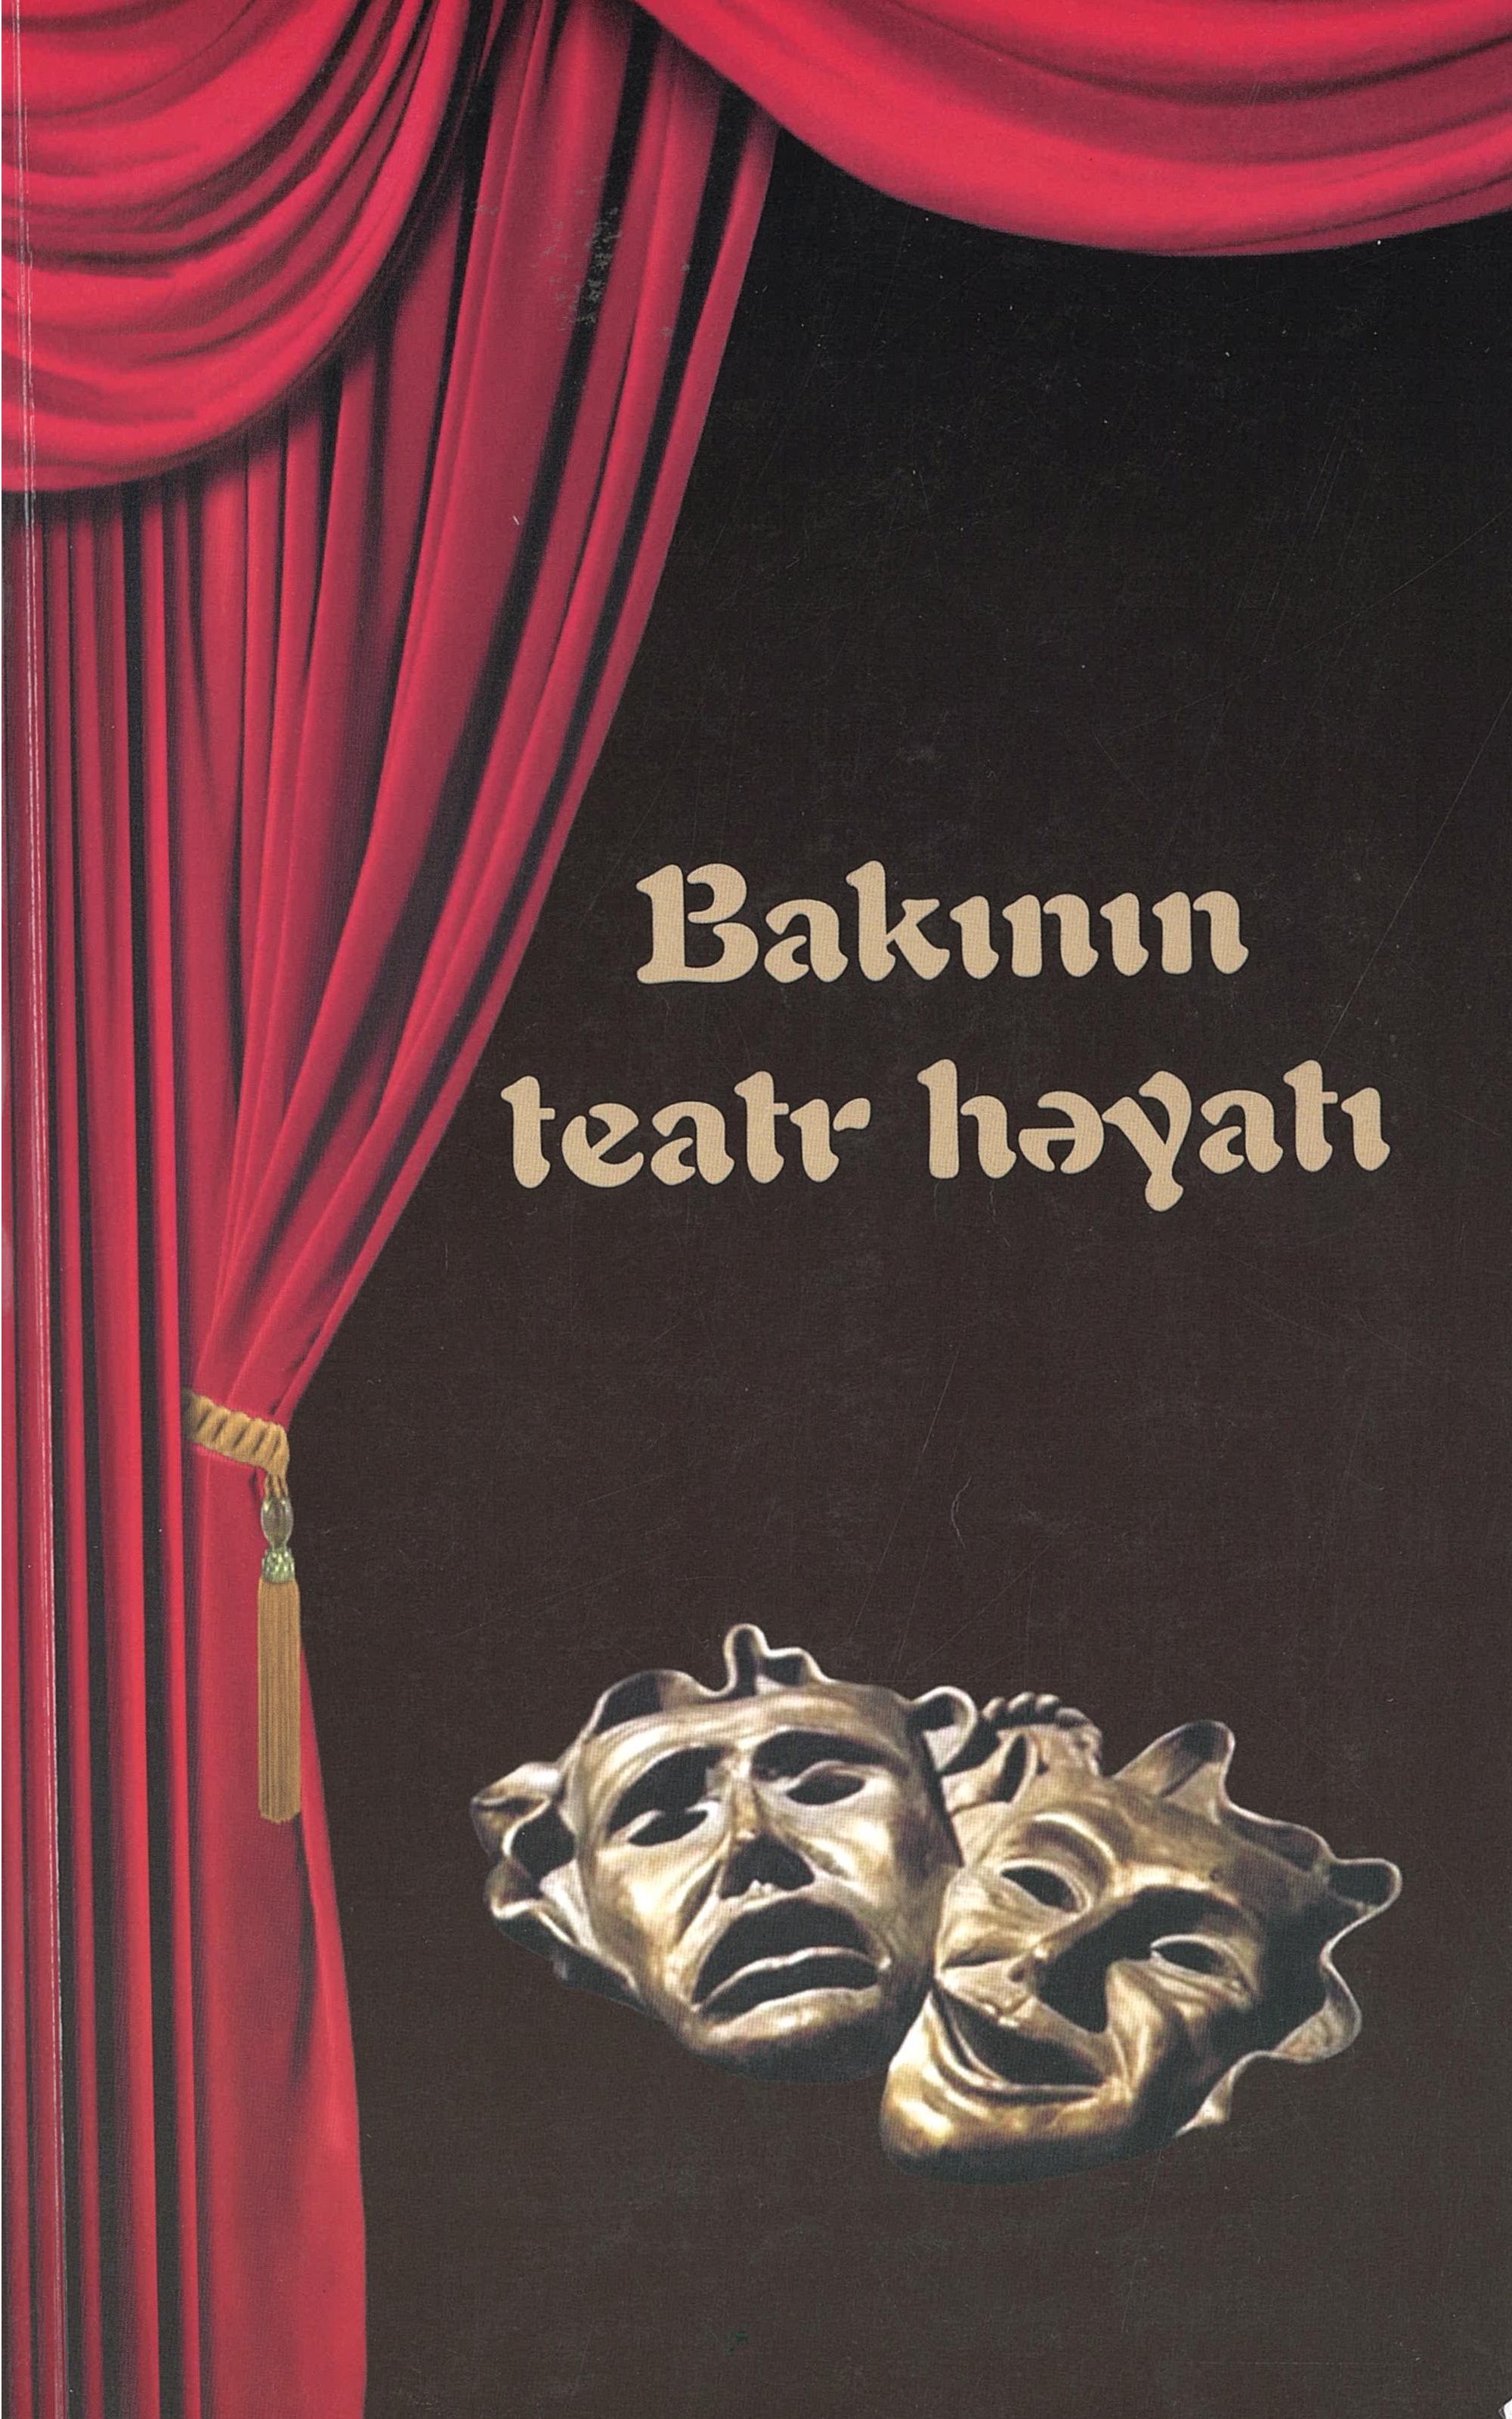  Theatrical life of Baku